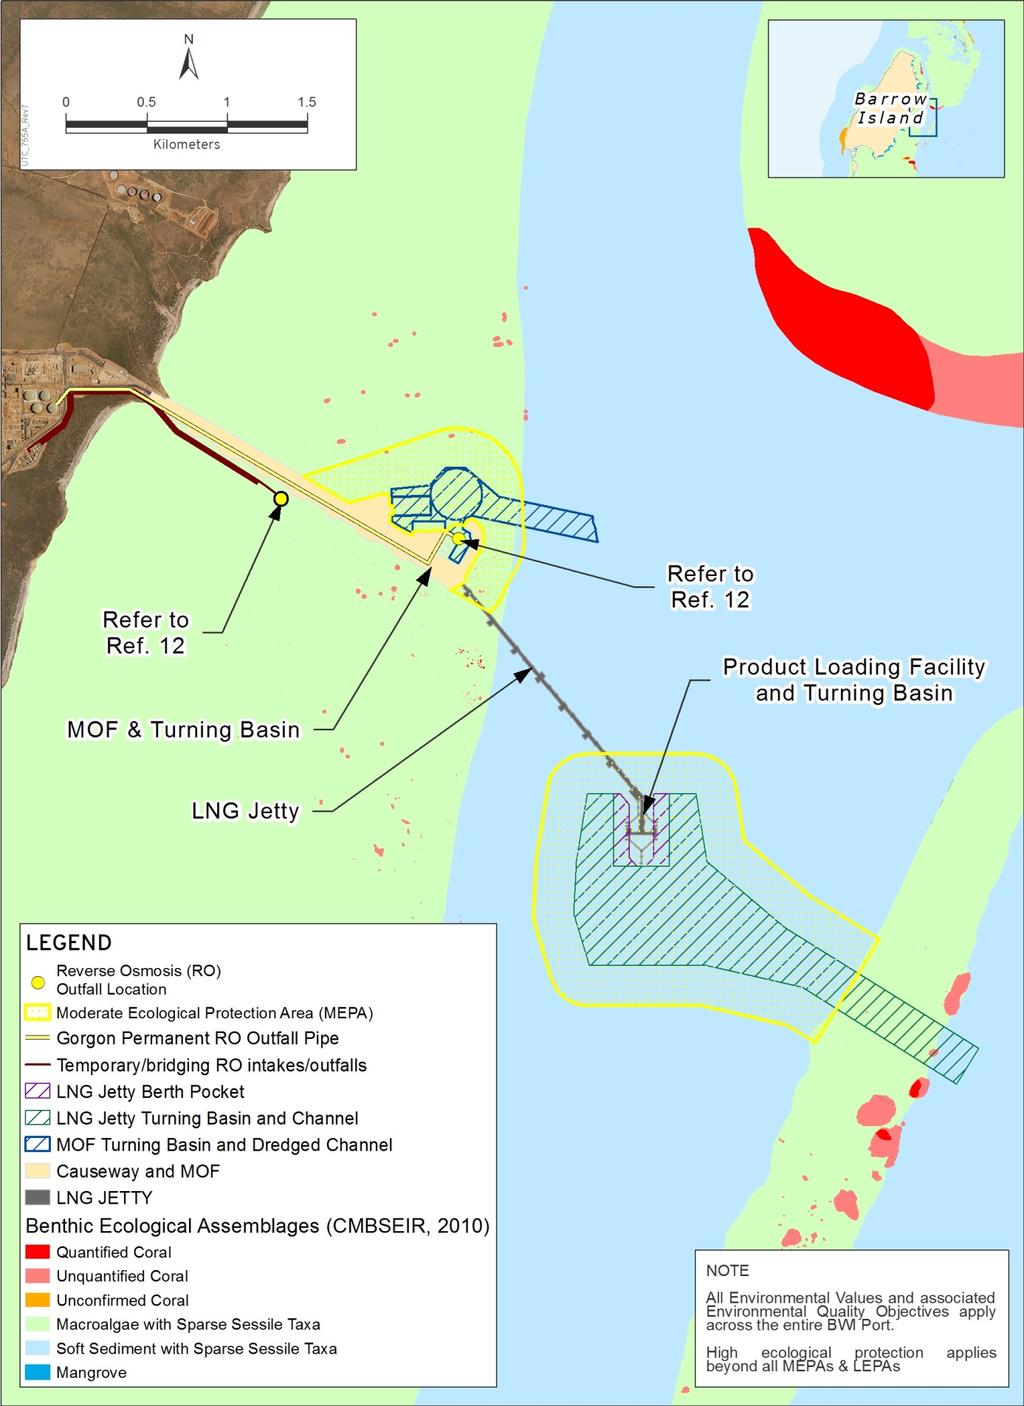 Figure 6-3: MOF and LNG Jetty showing MEPA Boundaries